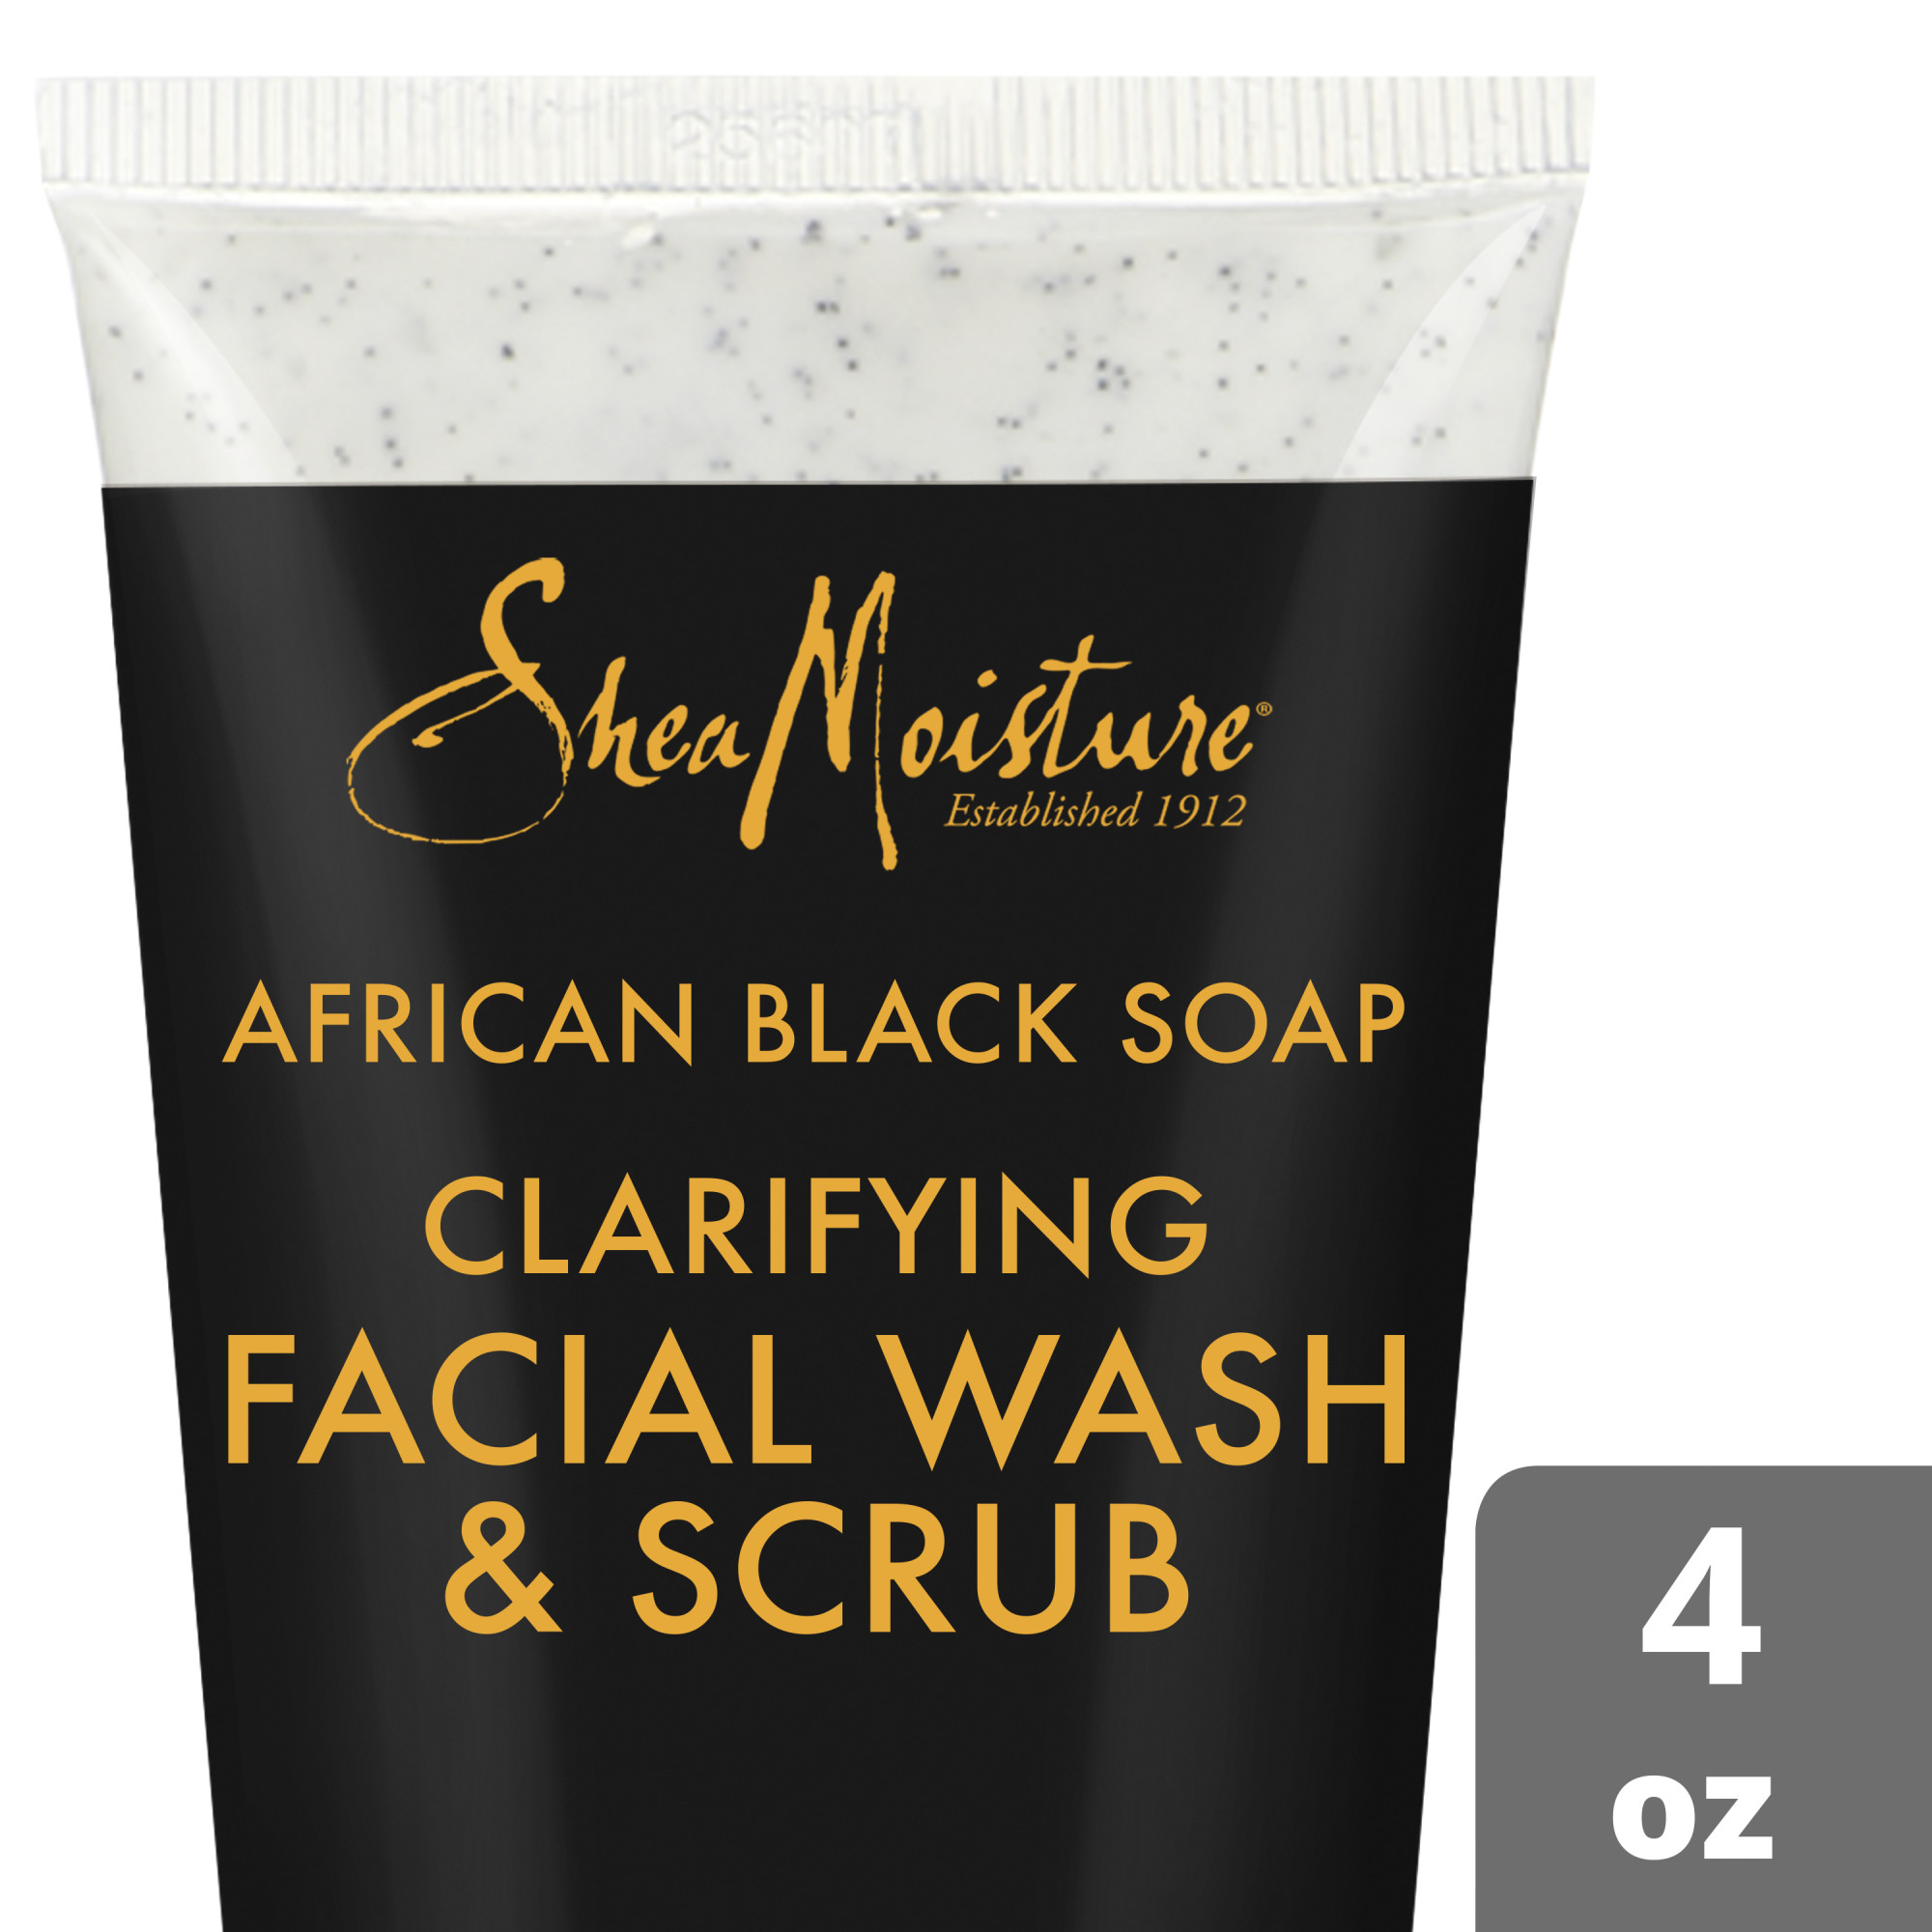 SheaMoisture African Black Soap Clarifying Facial Wash & Scrub, 4 oz - image 1 of 12